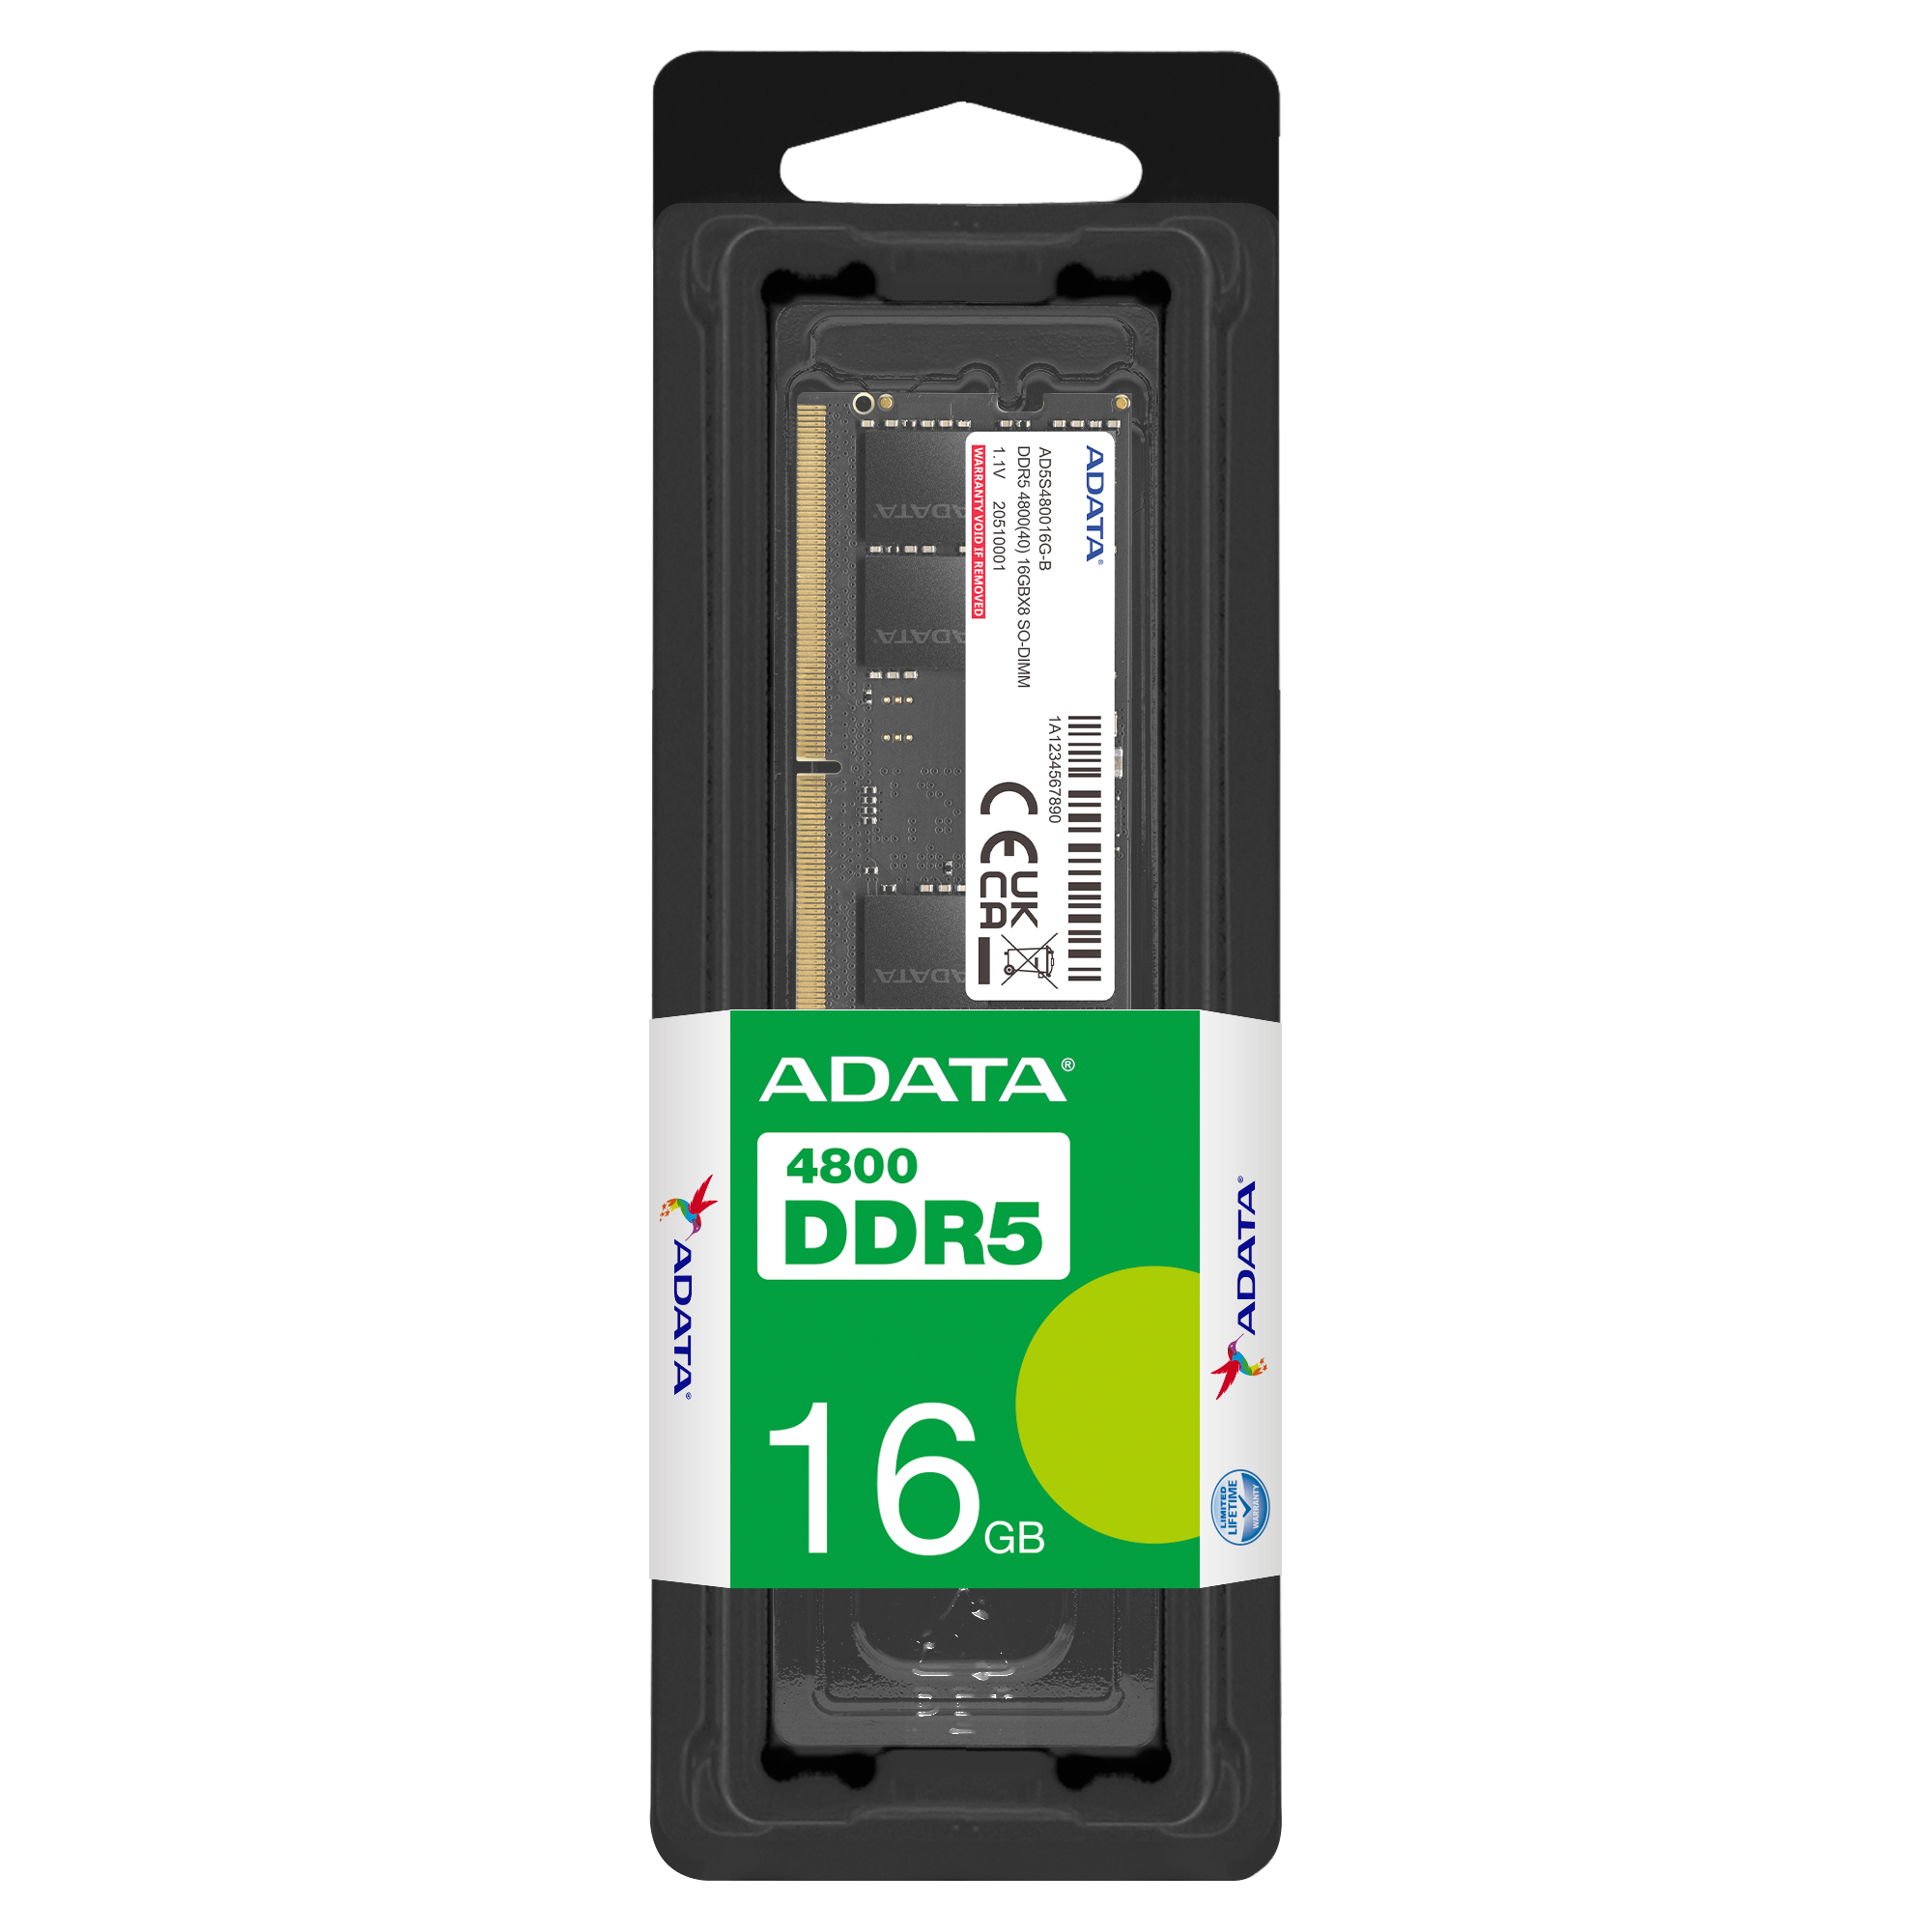 DDR5-4800 SO-DIMM Memory Module | ADATA (Global)